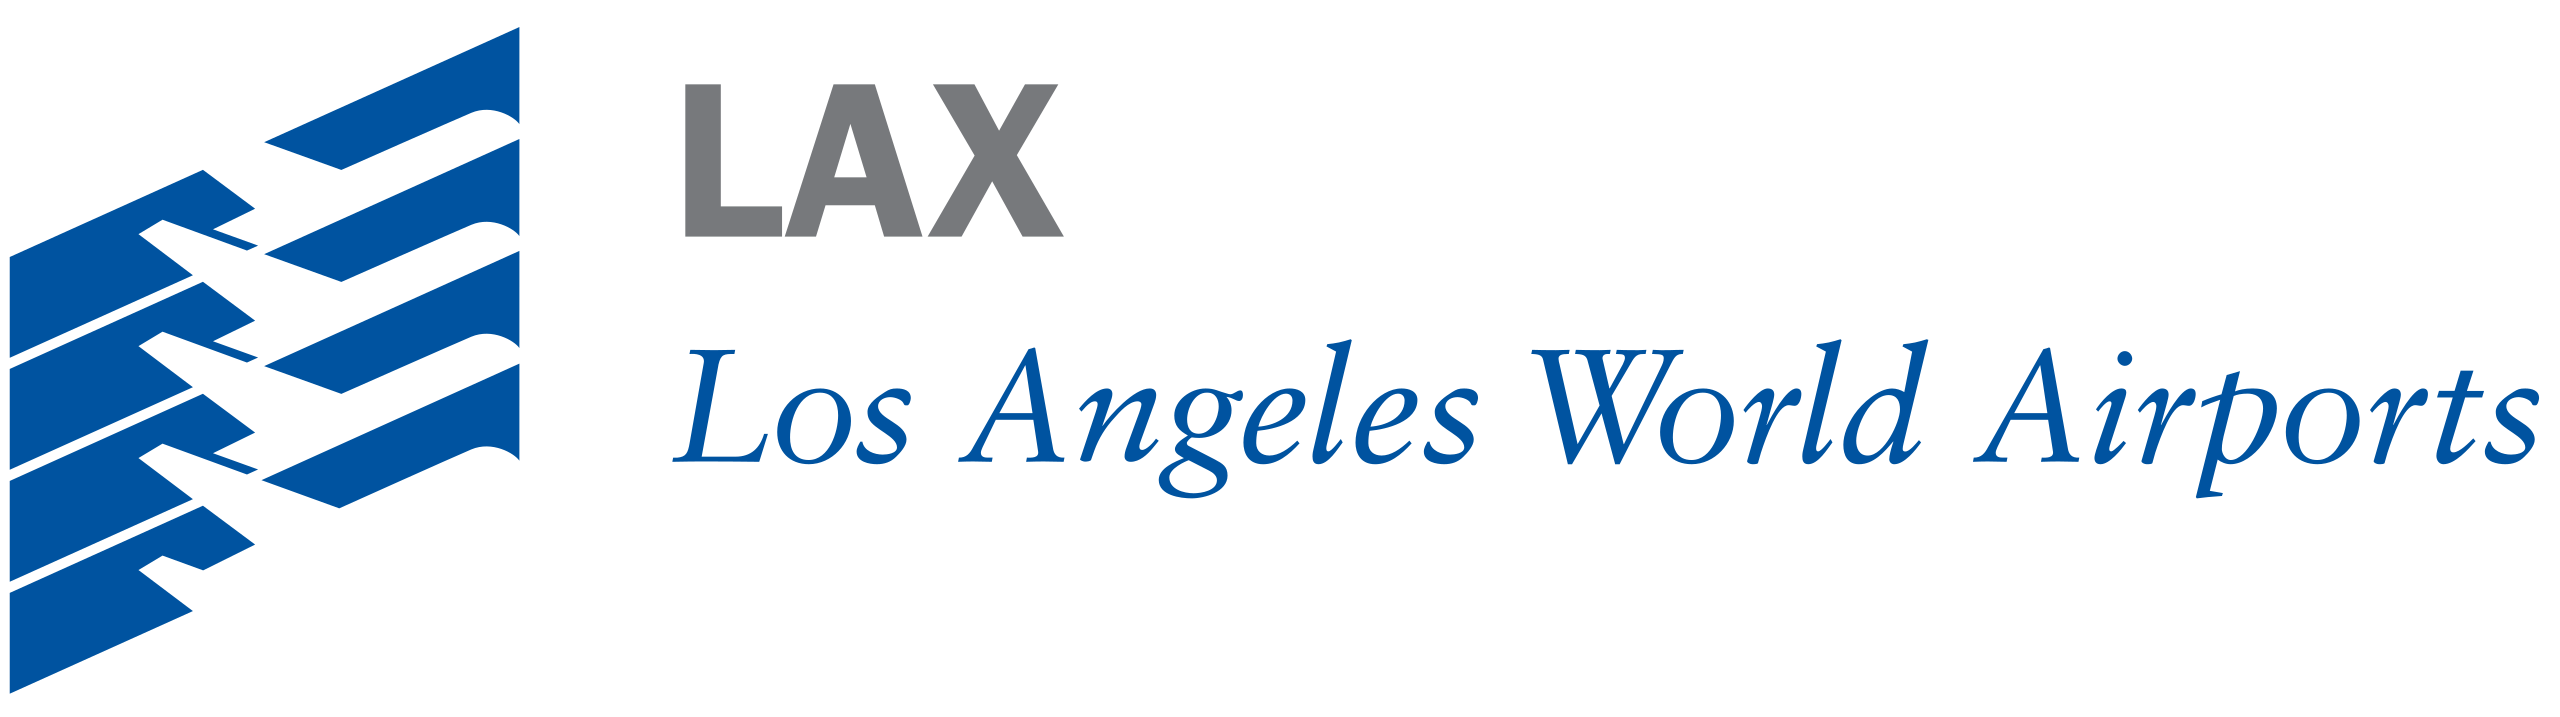 Los Angeles World Airports Logo